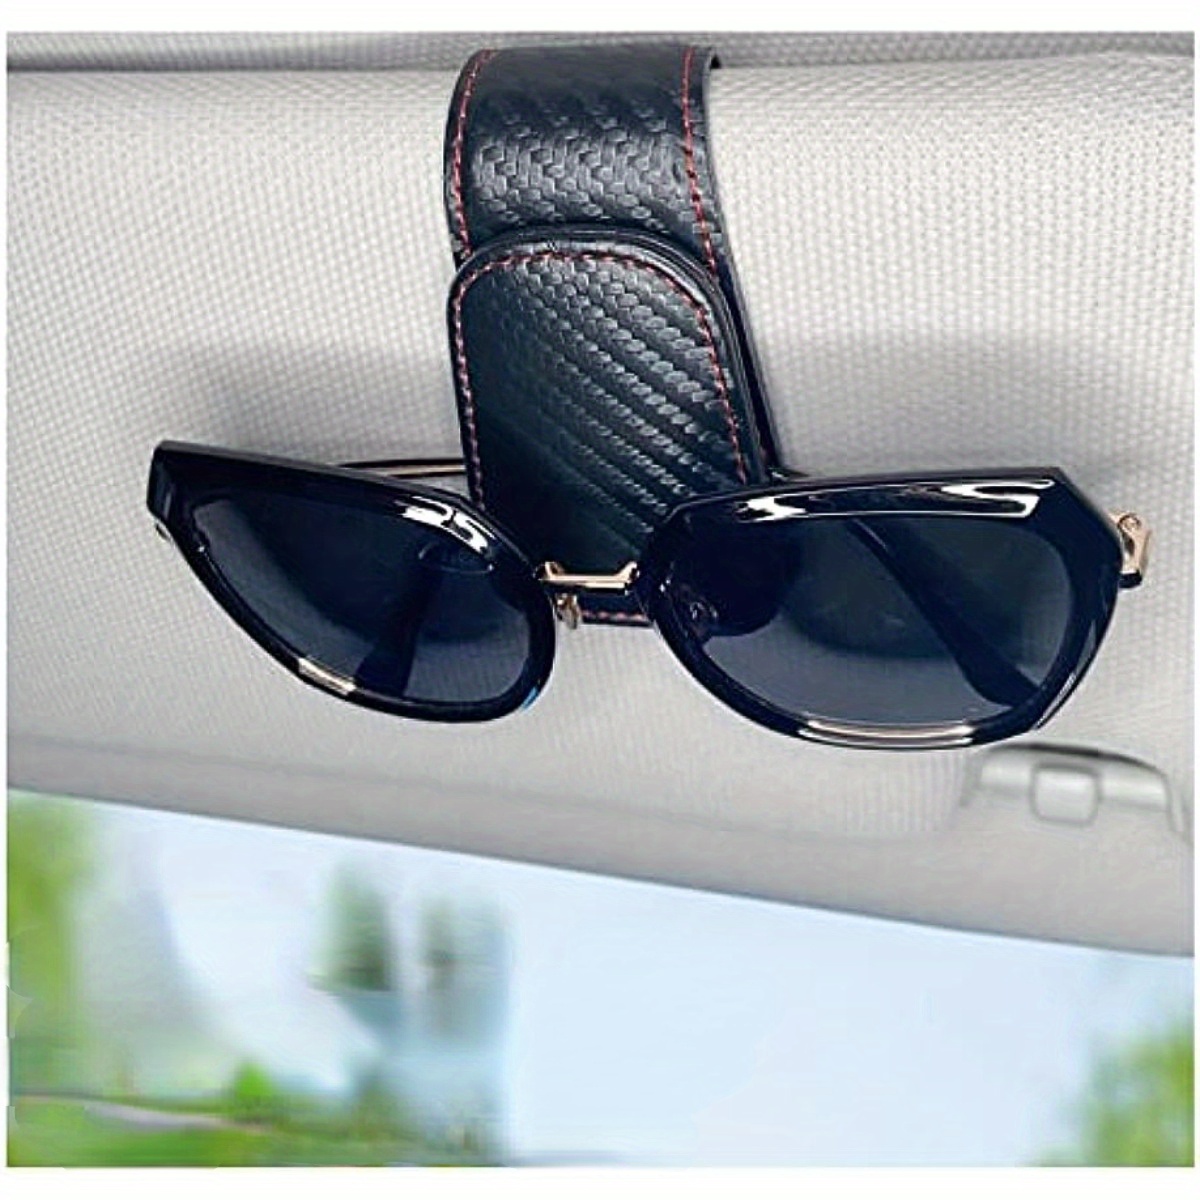 Yuoyar 2 Packs Sunglasses Holders for Car Visor - Magnetic Leather  Sunglasses Holder and Ticket Card Clip - Car Visor Accessories (Black)